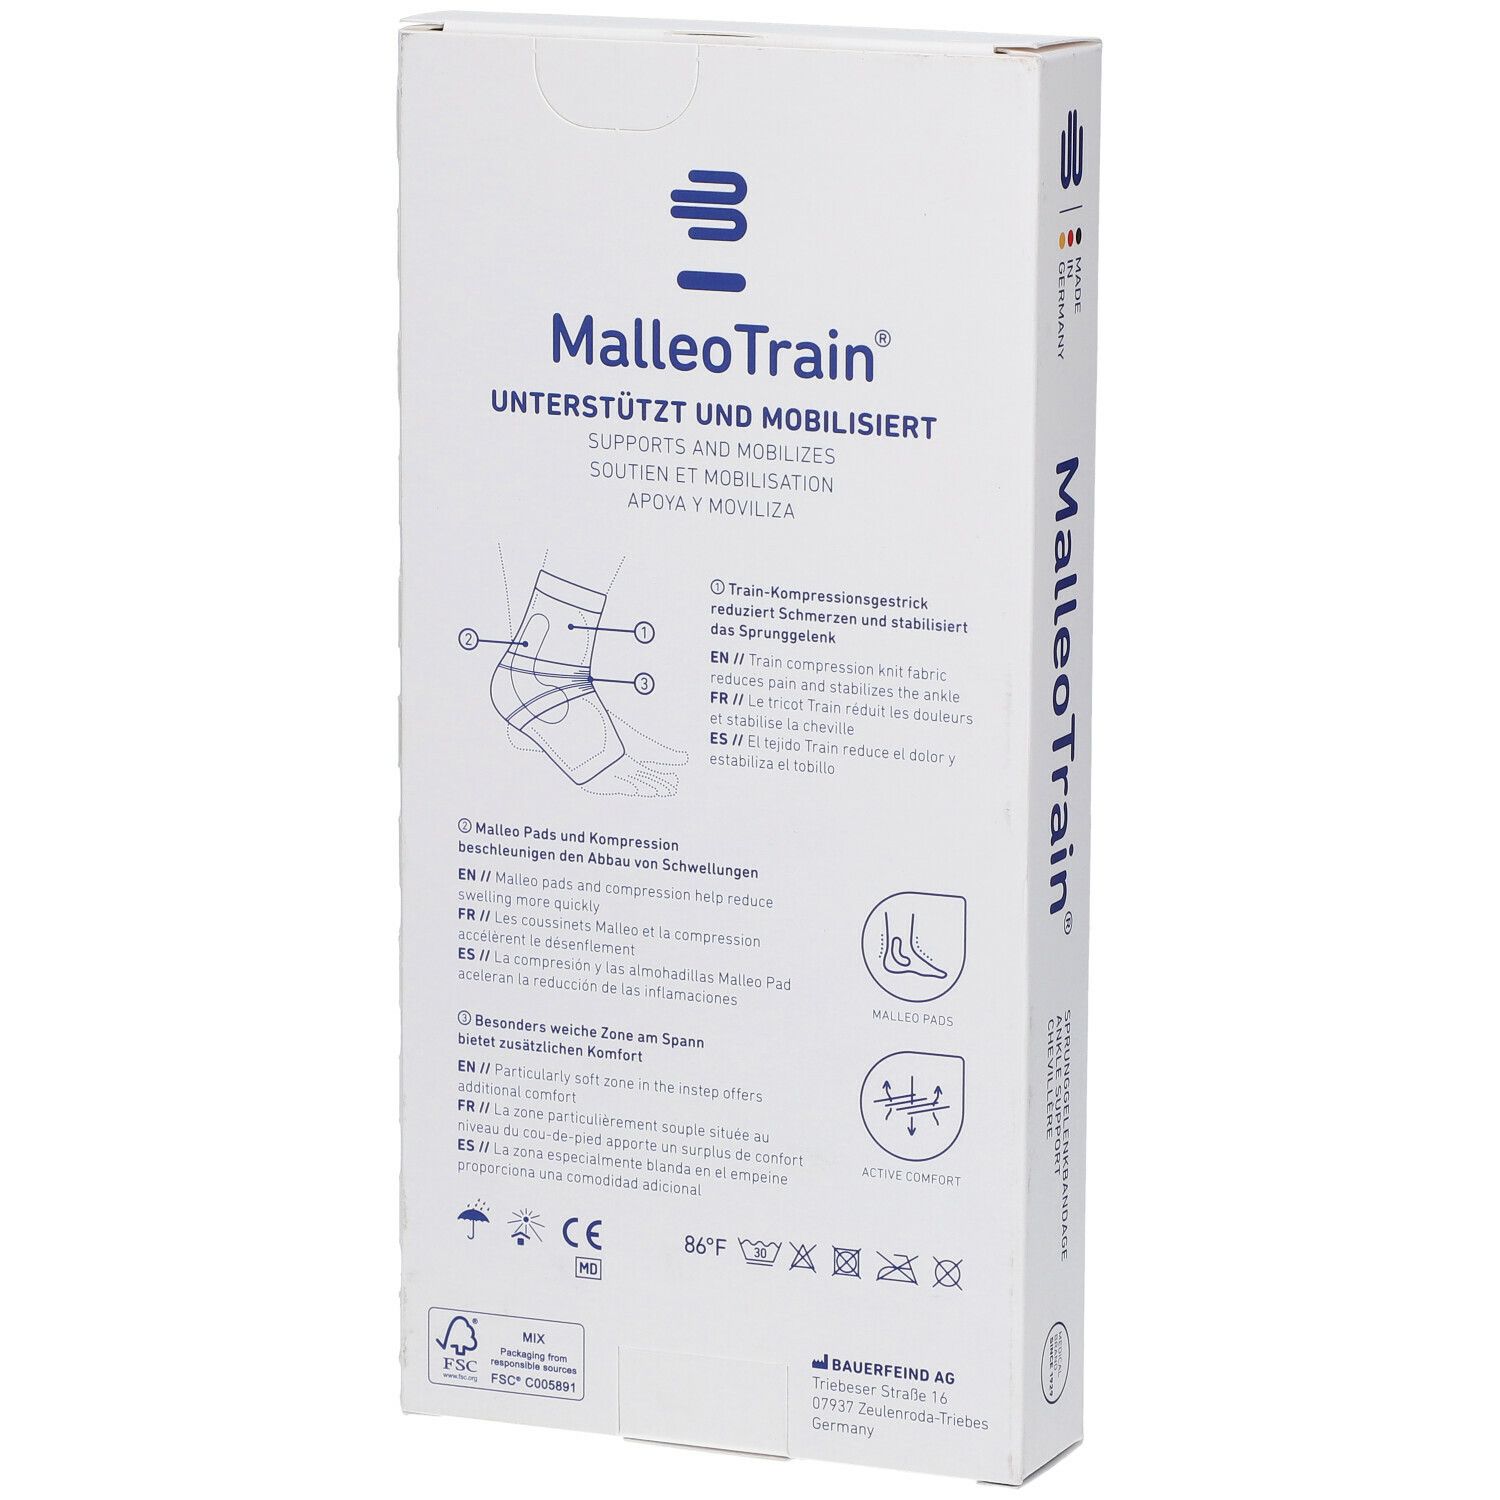 MalleoTrain® Sprunggelenkbandage links Gr.4 titan